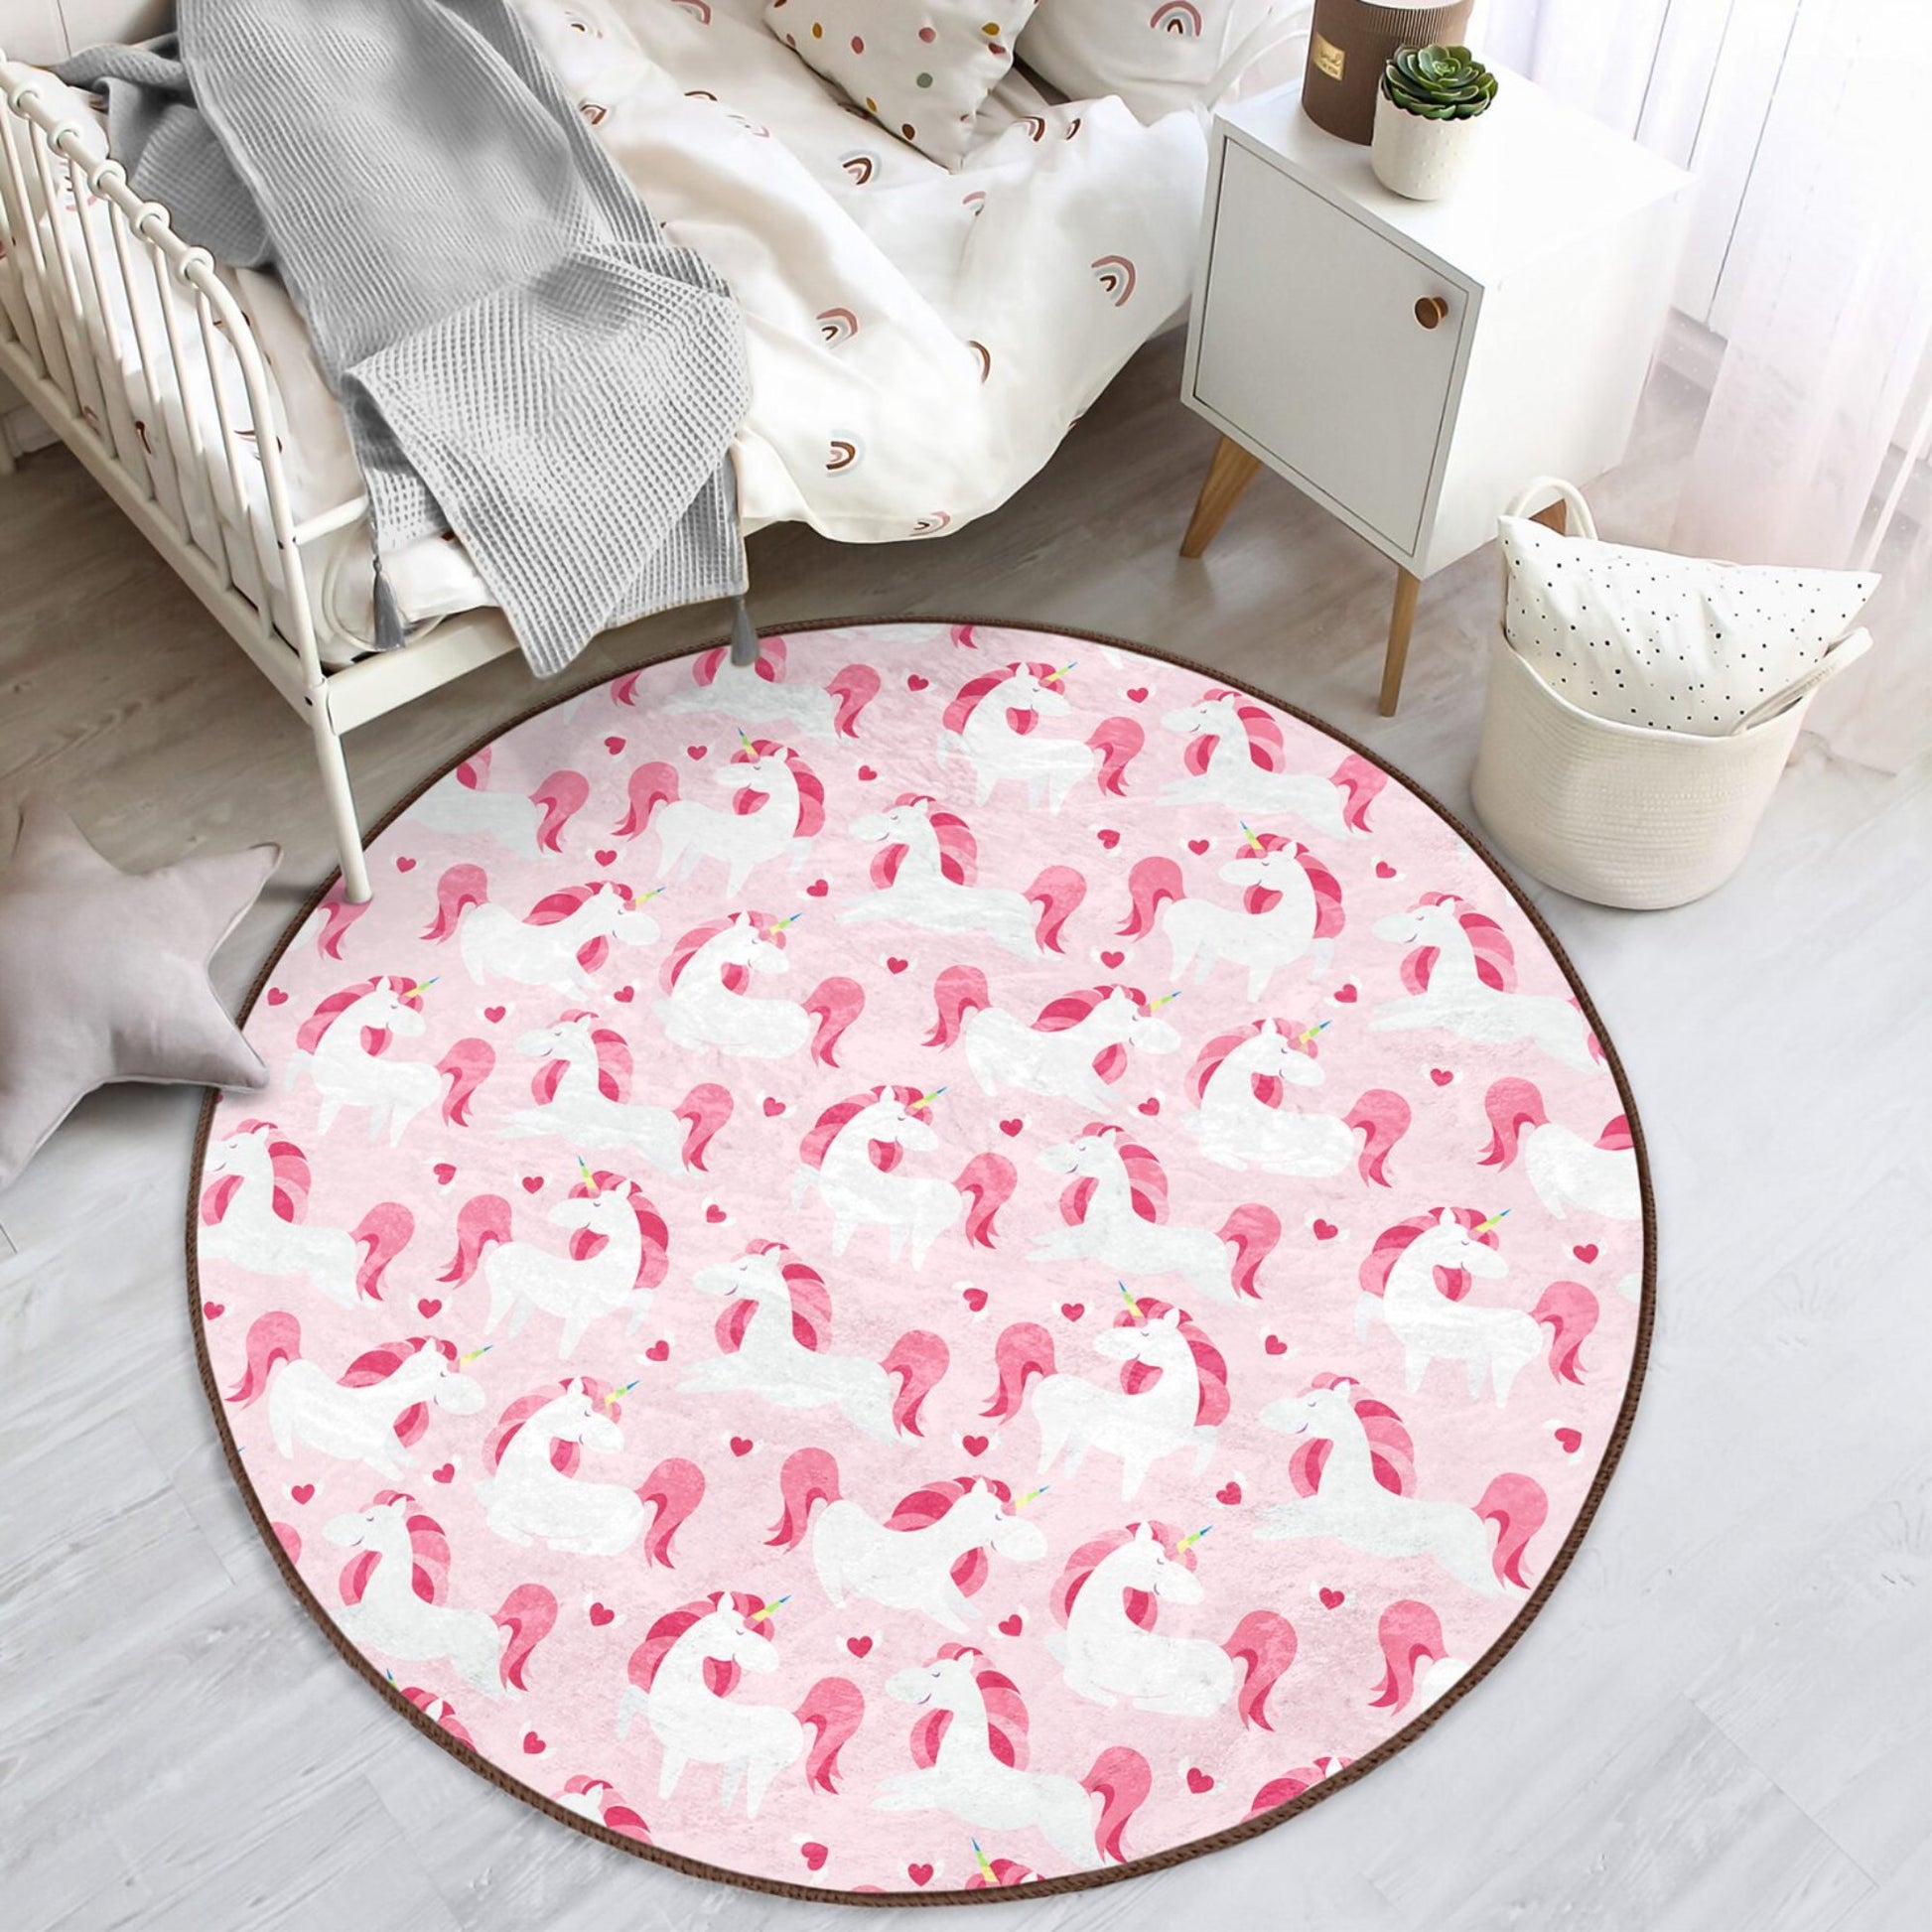 Homeezone's Pink Unicorn Pattern Girls' Room Rug